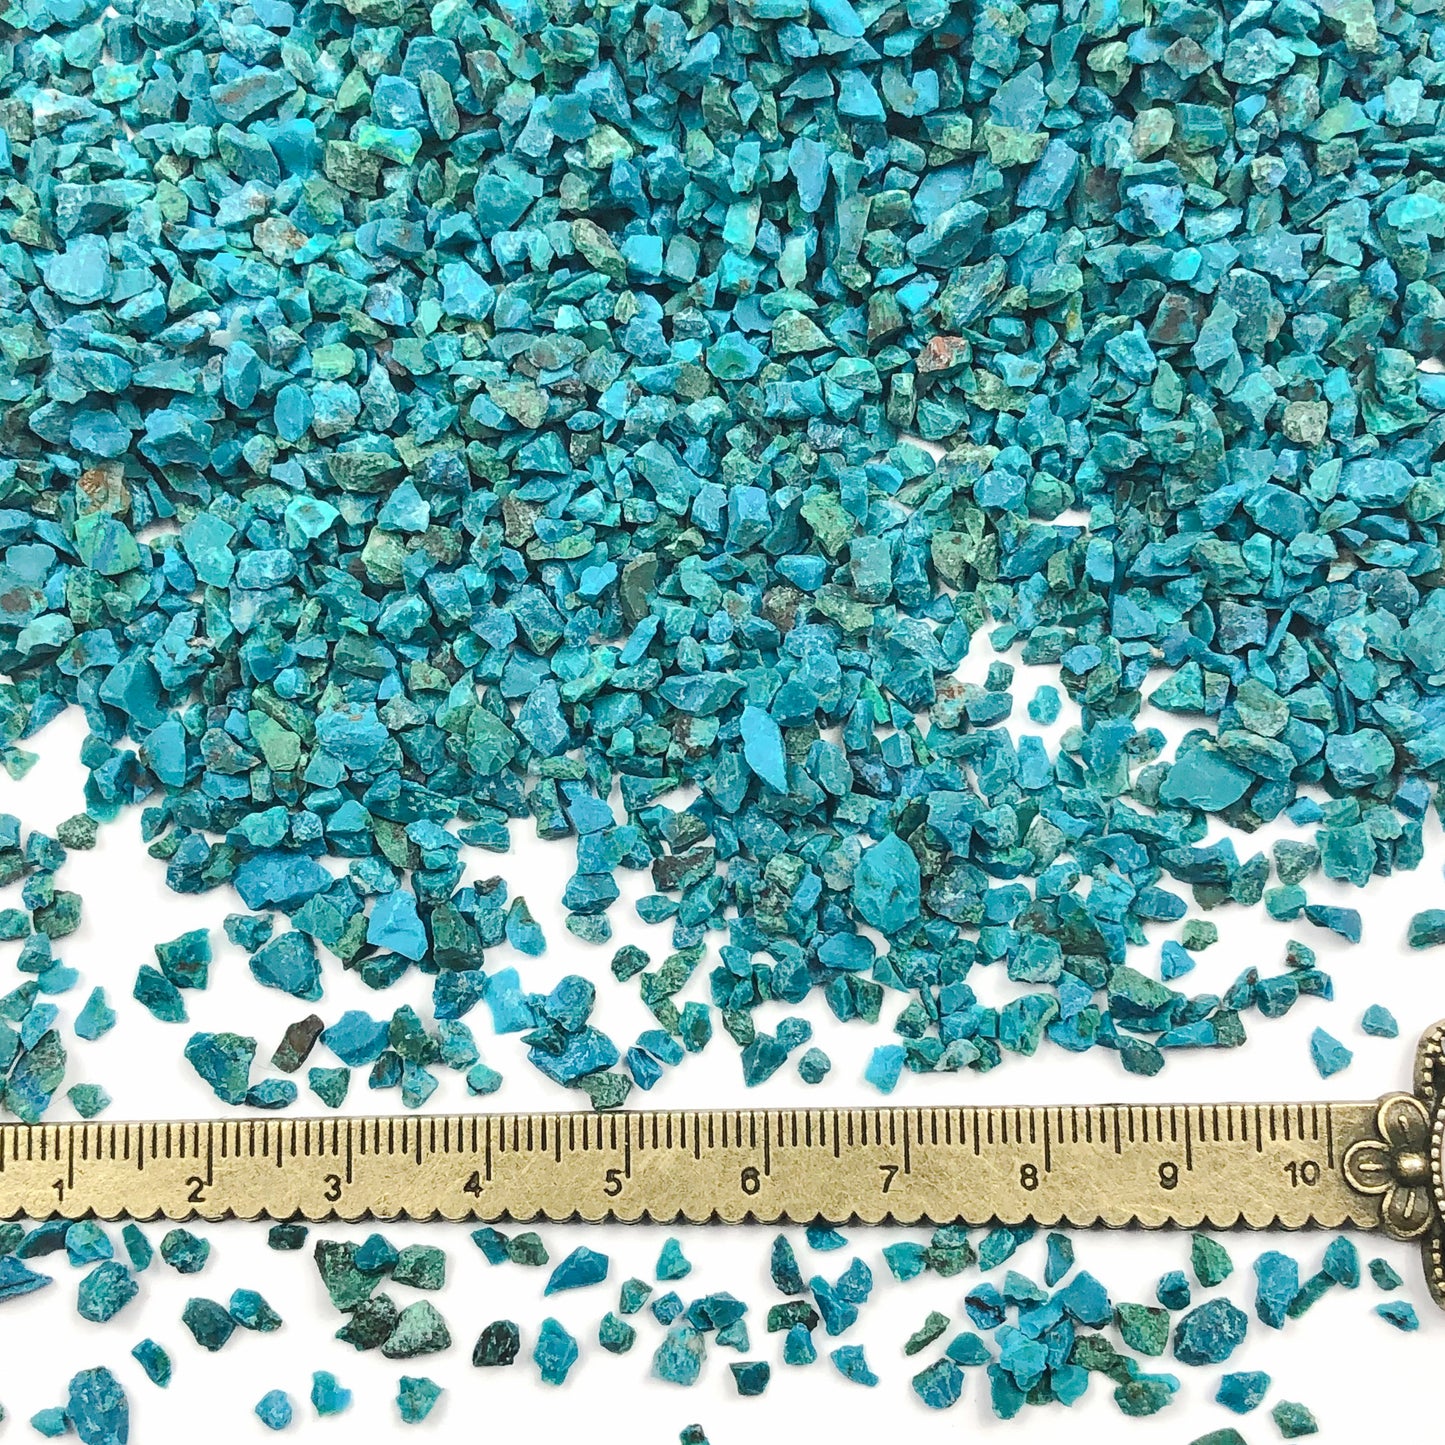 Crushed Dark Blue Chrysocolla from Peru, Coarse Crush, Gravel Size, 4mm - 2mm